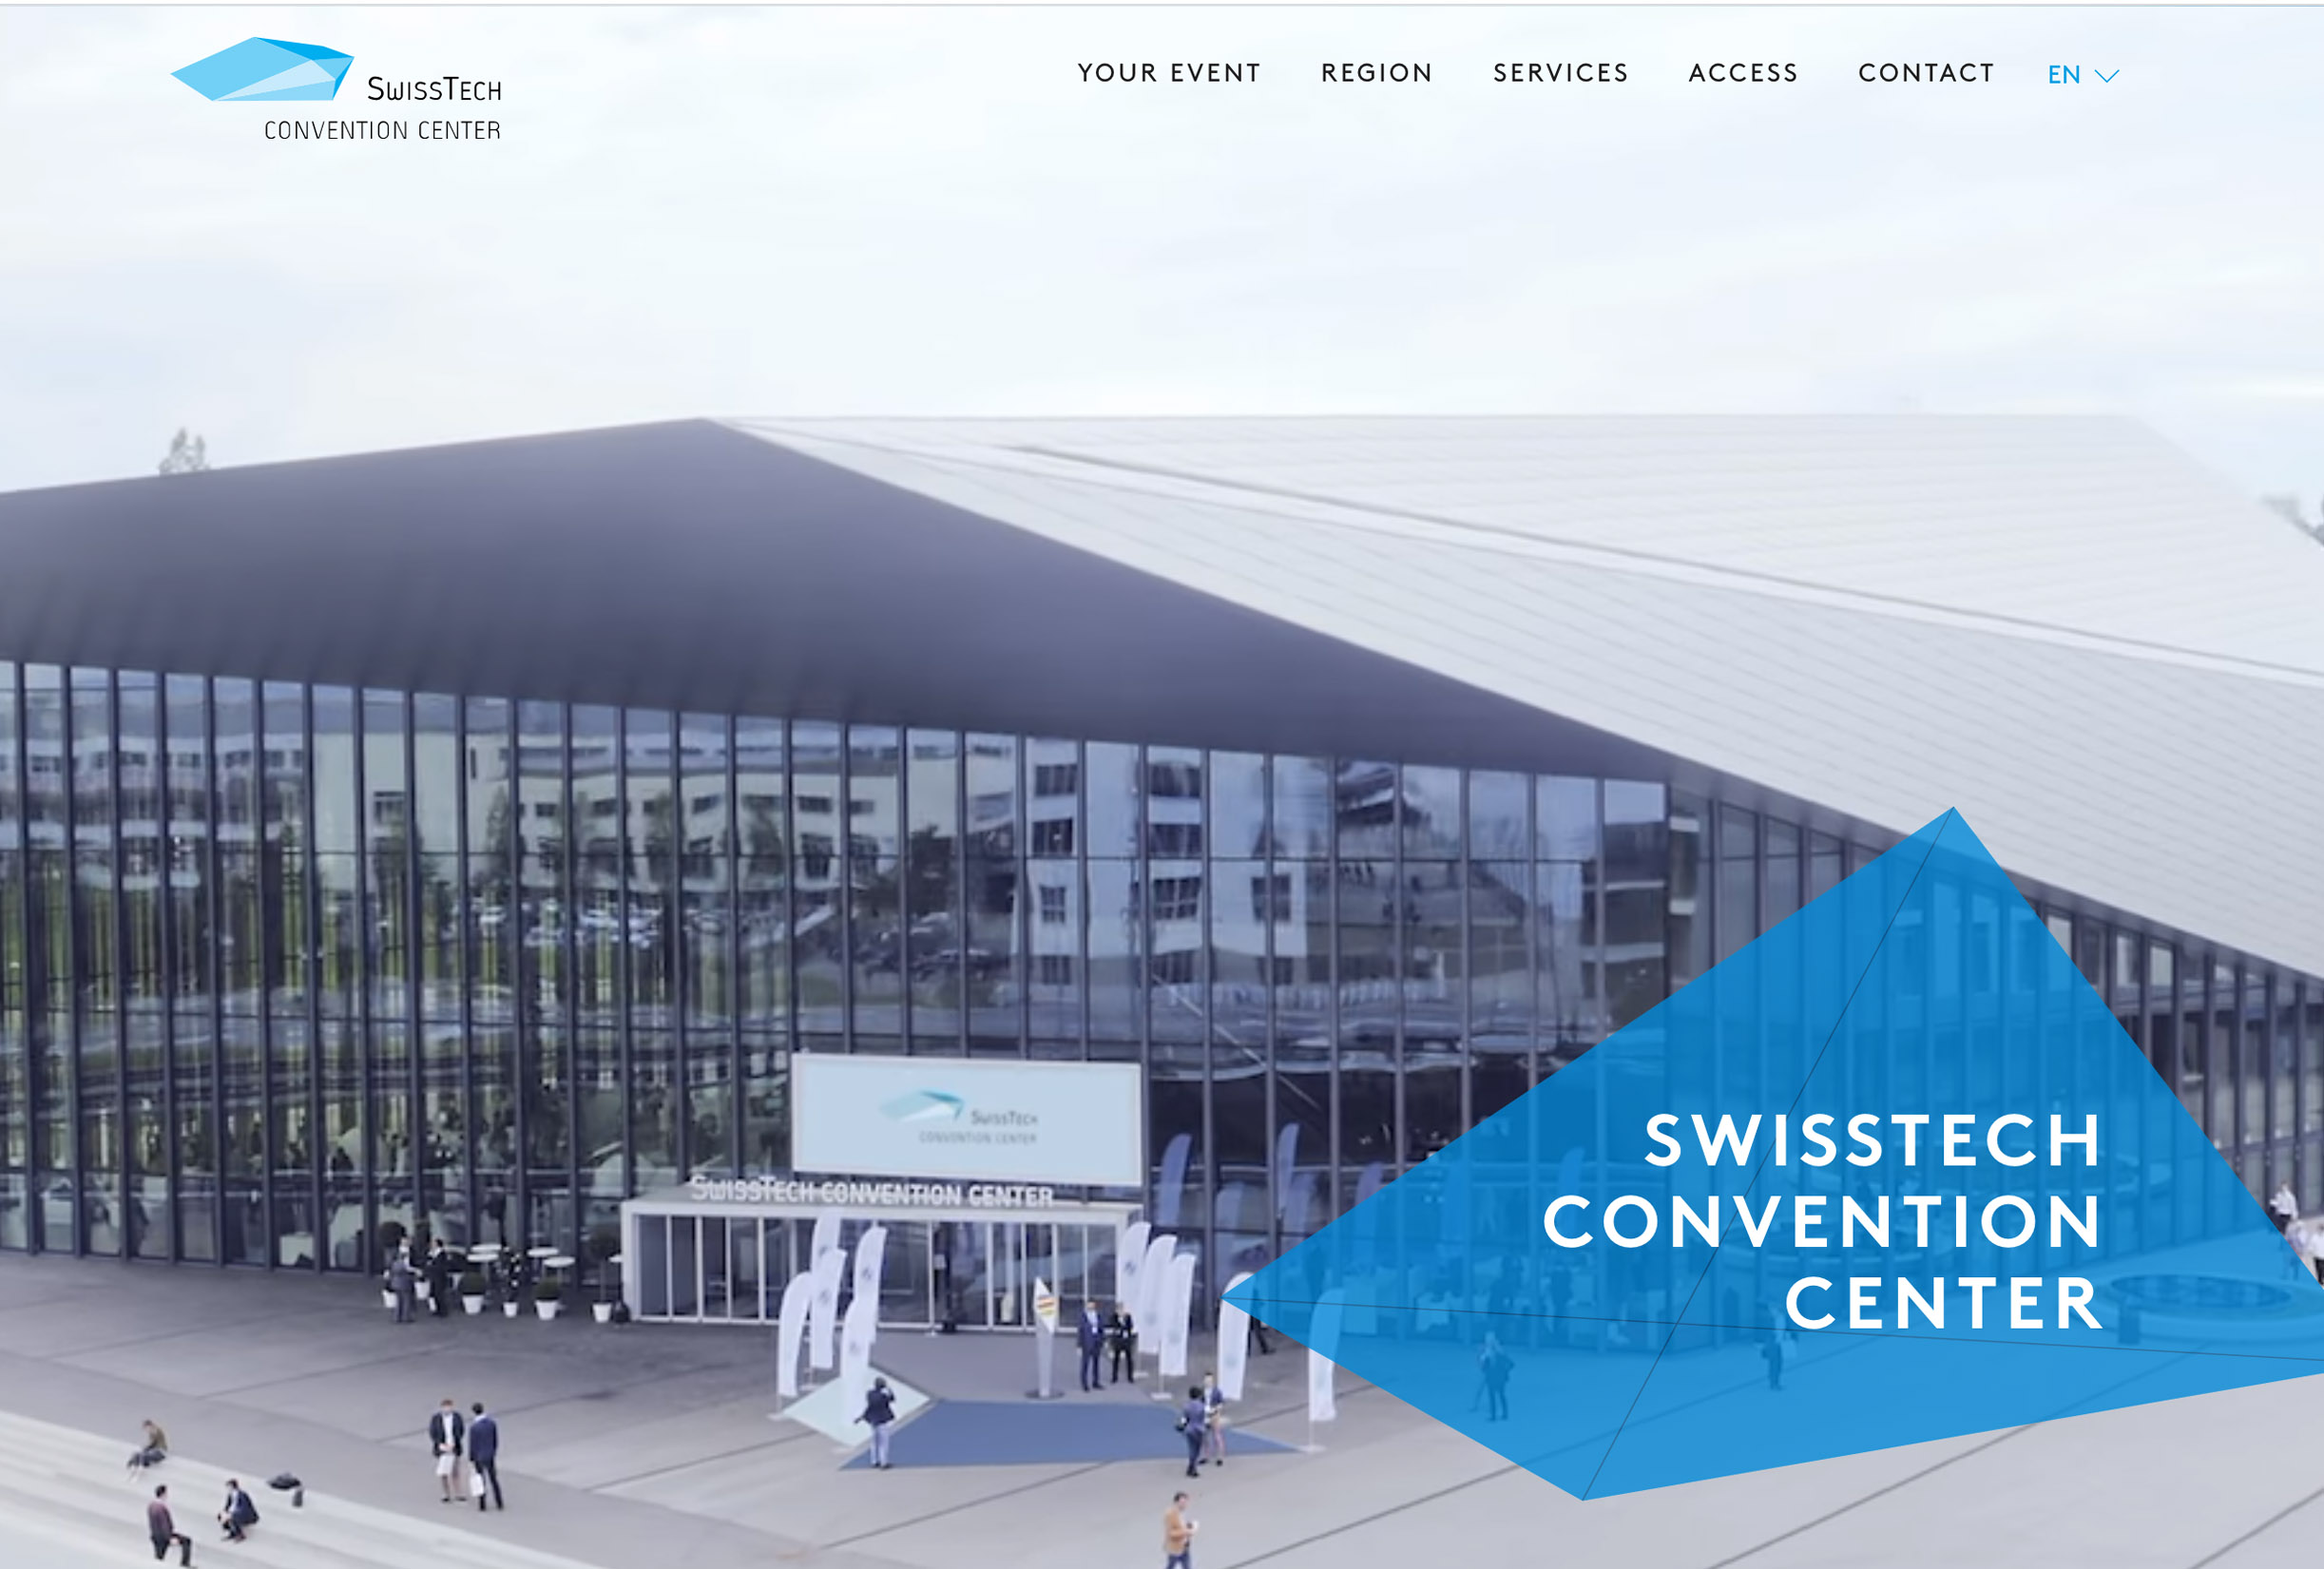 SwissTech Convention Center - Wikipedia